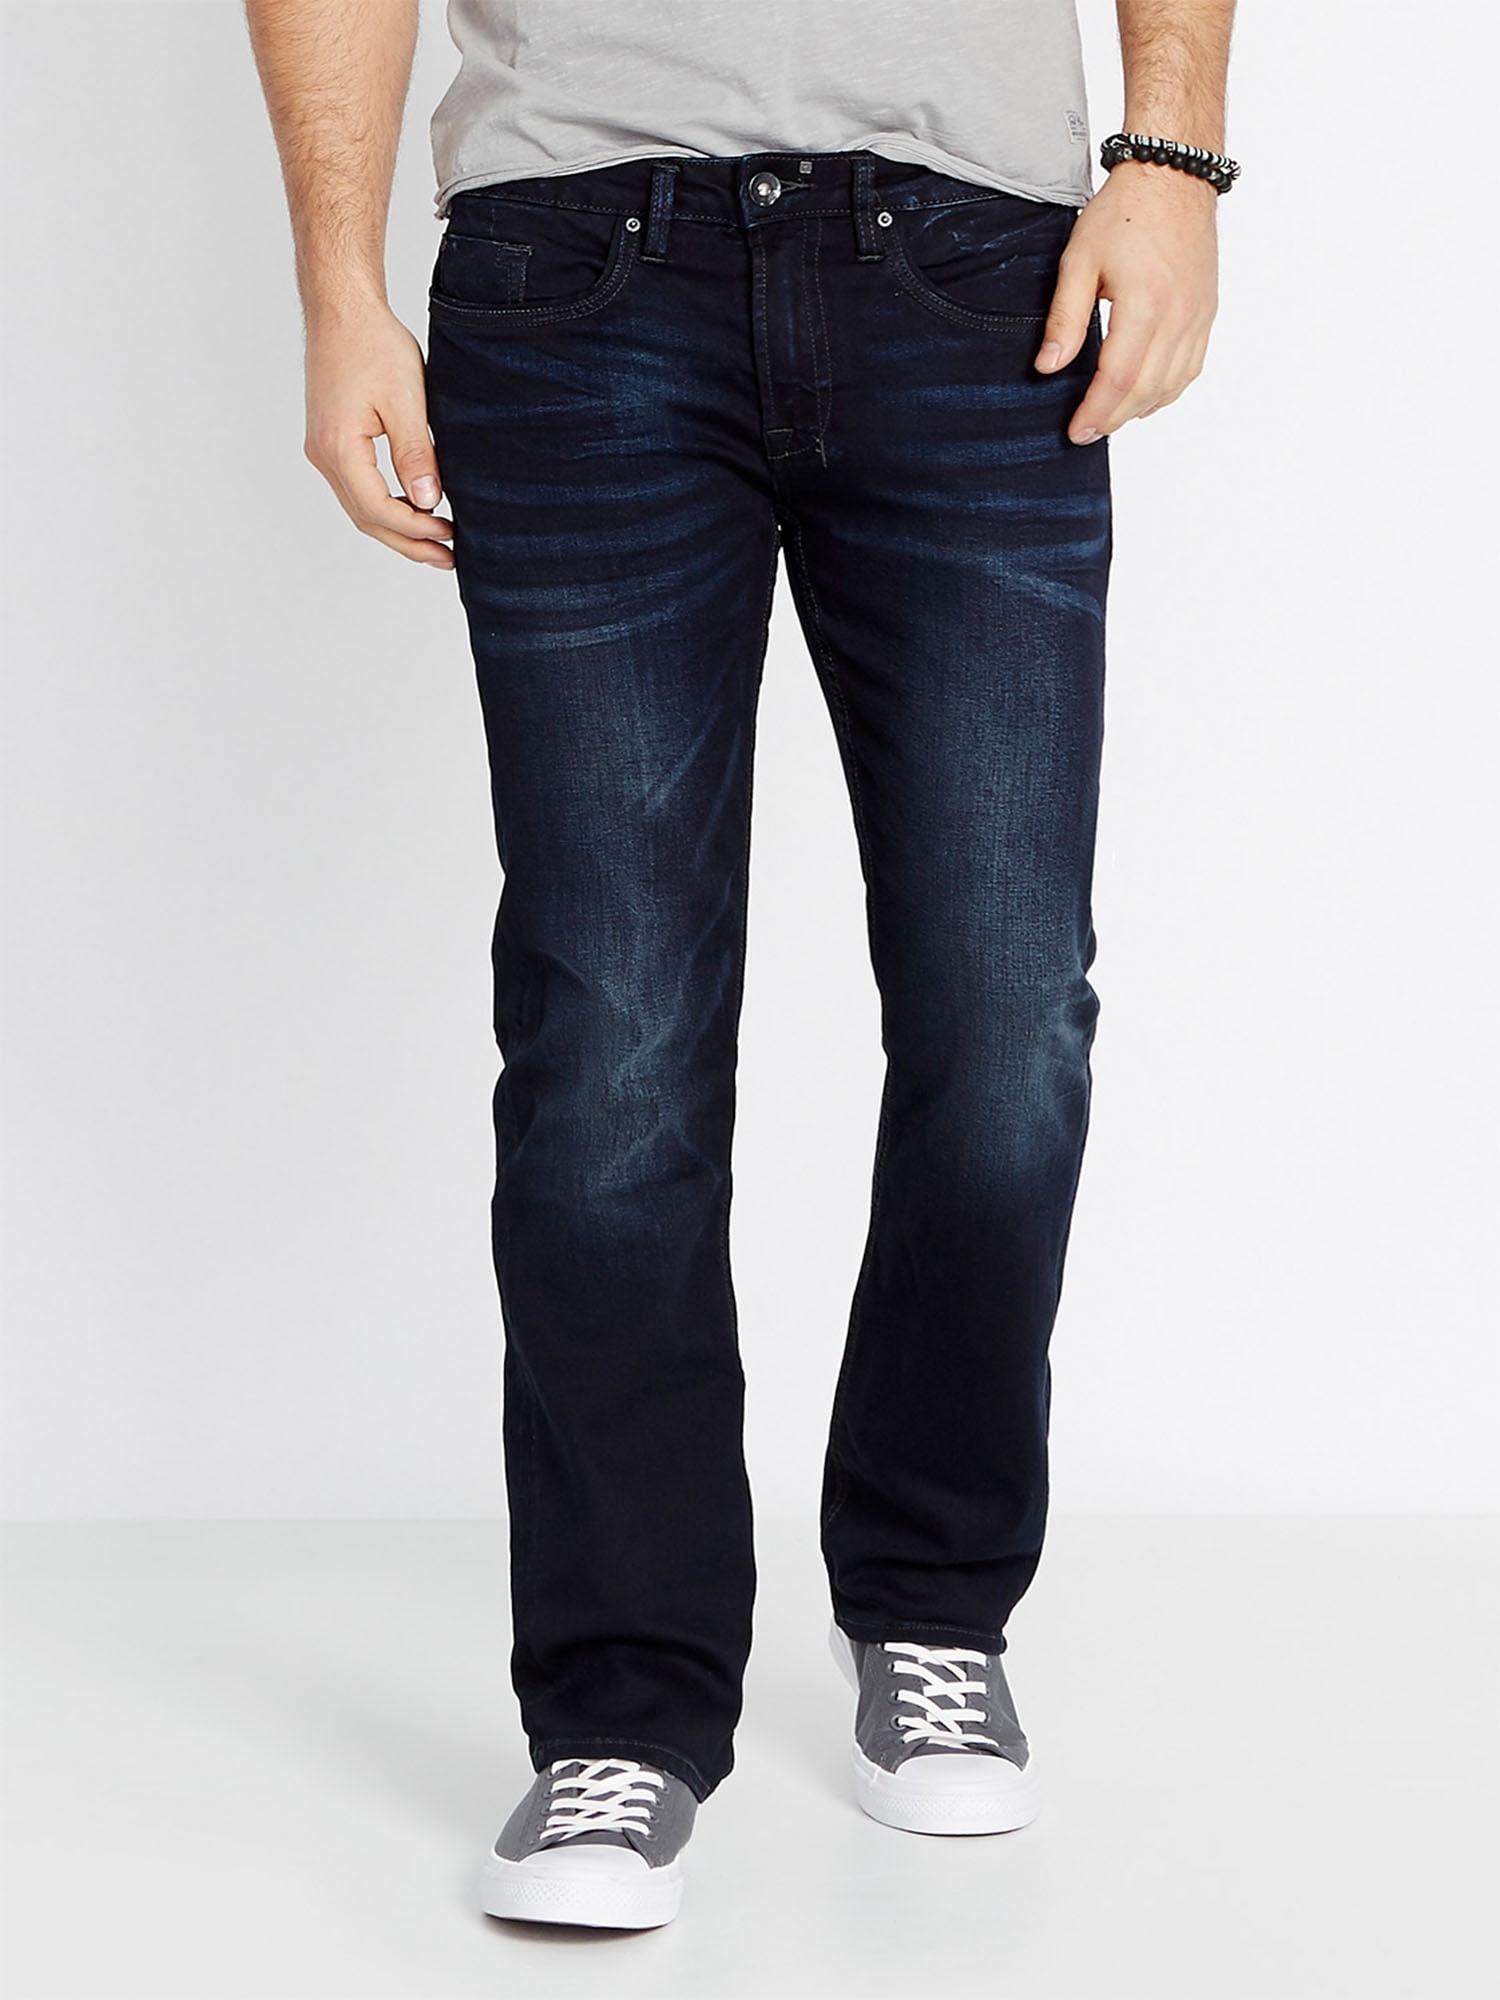 david button jeans